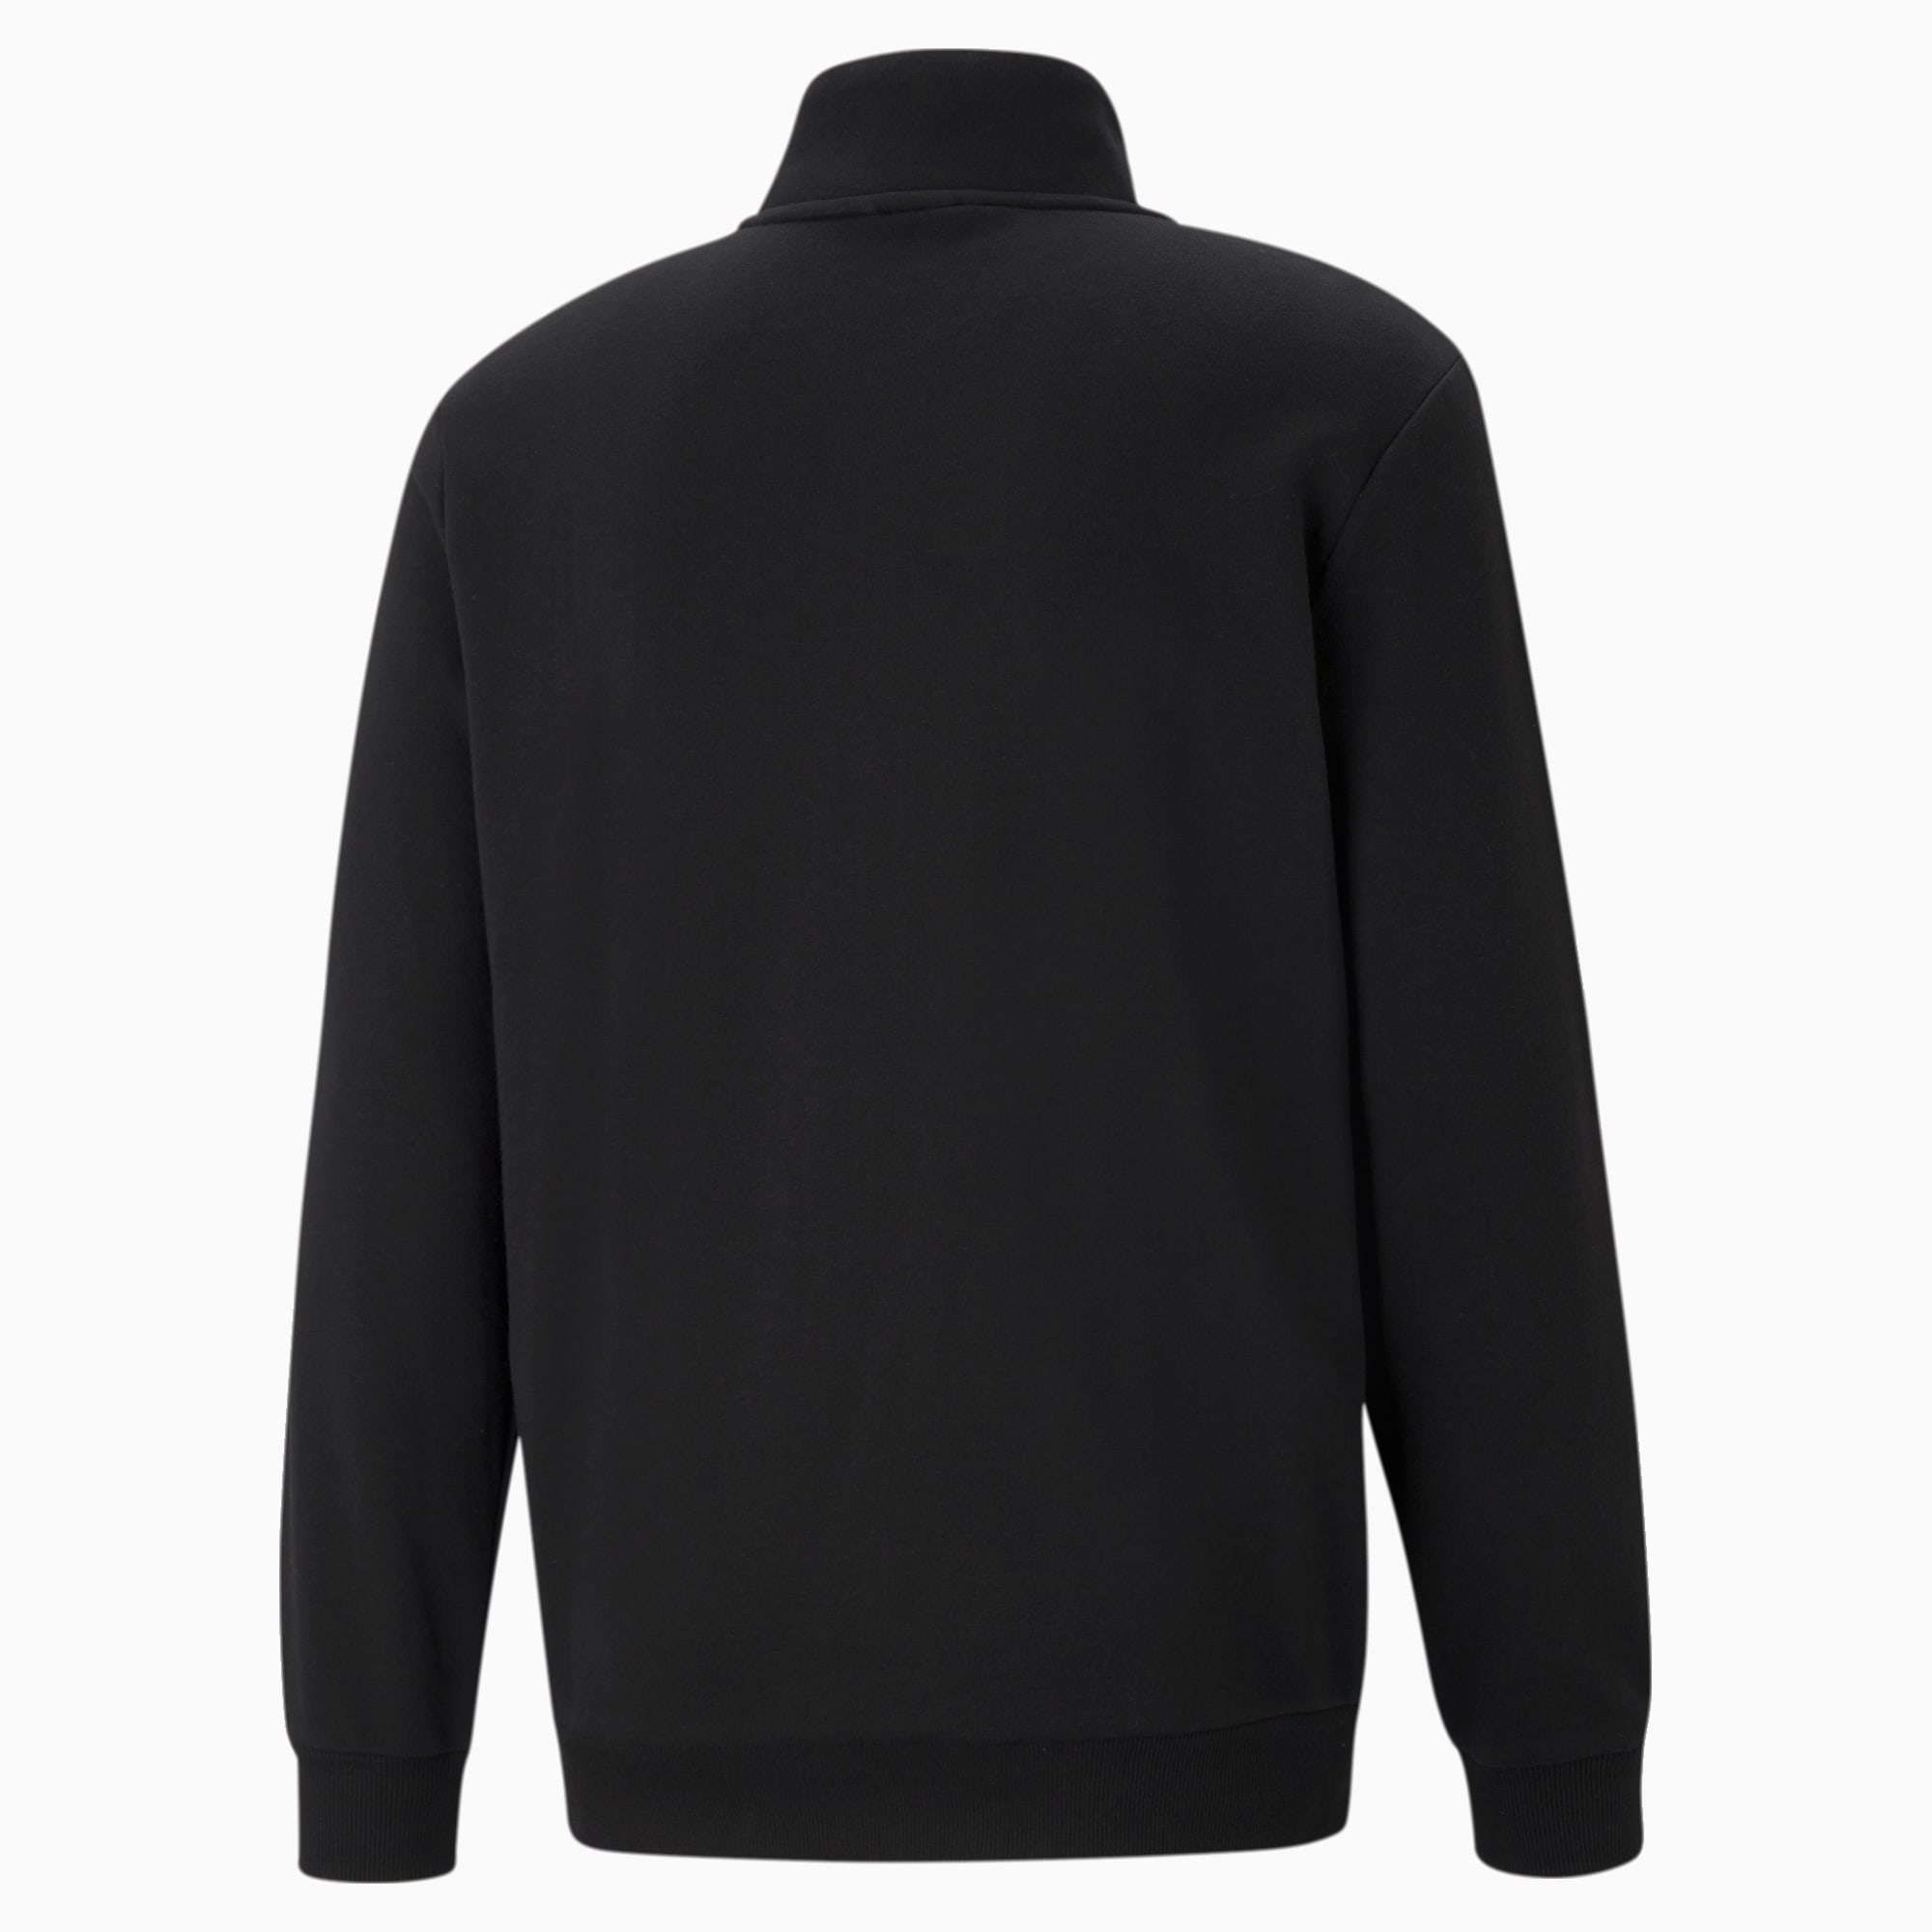 PUMA Essentials Men's Track Jacket, Black, Size XS, Clothing